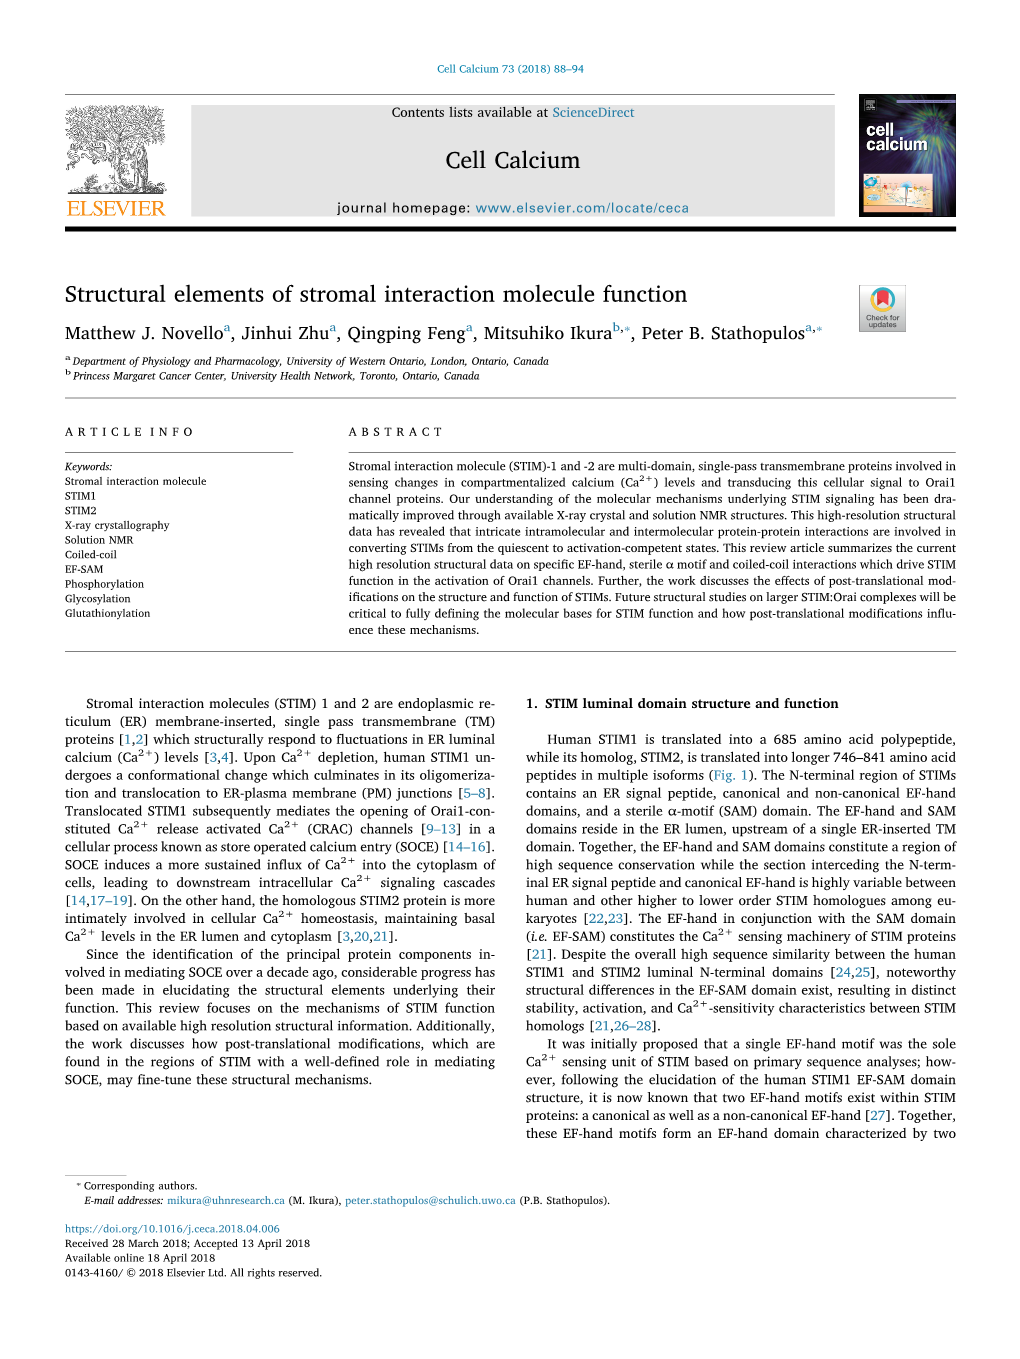 Structural Elements of Stromal Interaction Molecule Function T ⁎ ⁎ Matthew J